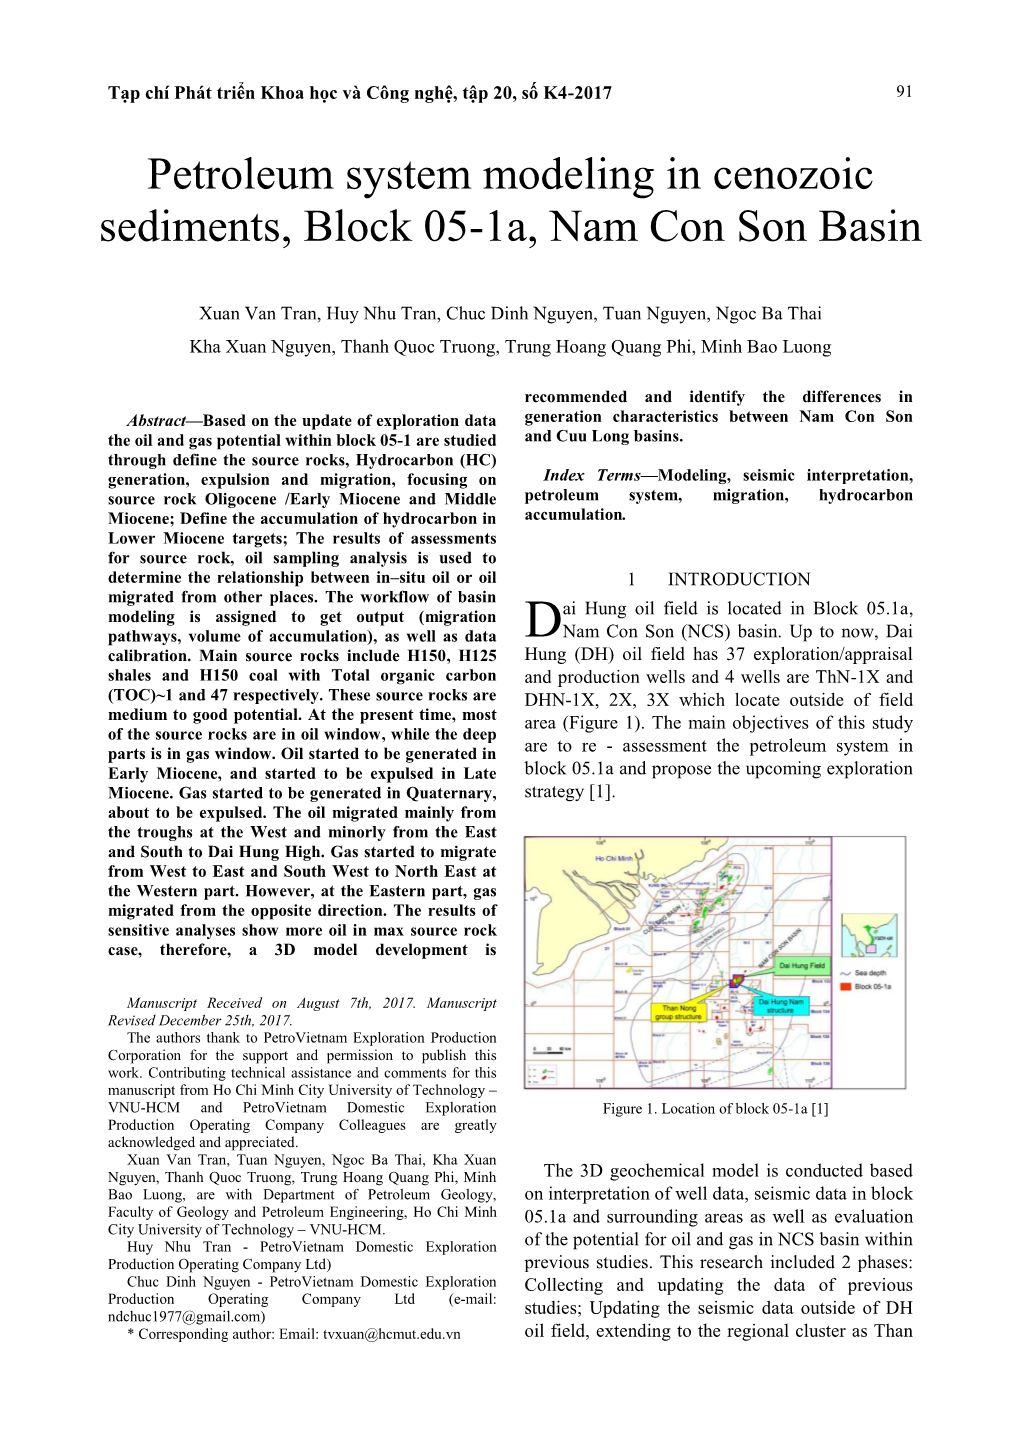 Petroleum System Modeling in Cenozoic Sediments, Block 05-1A, Nam Con Son Basin